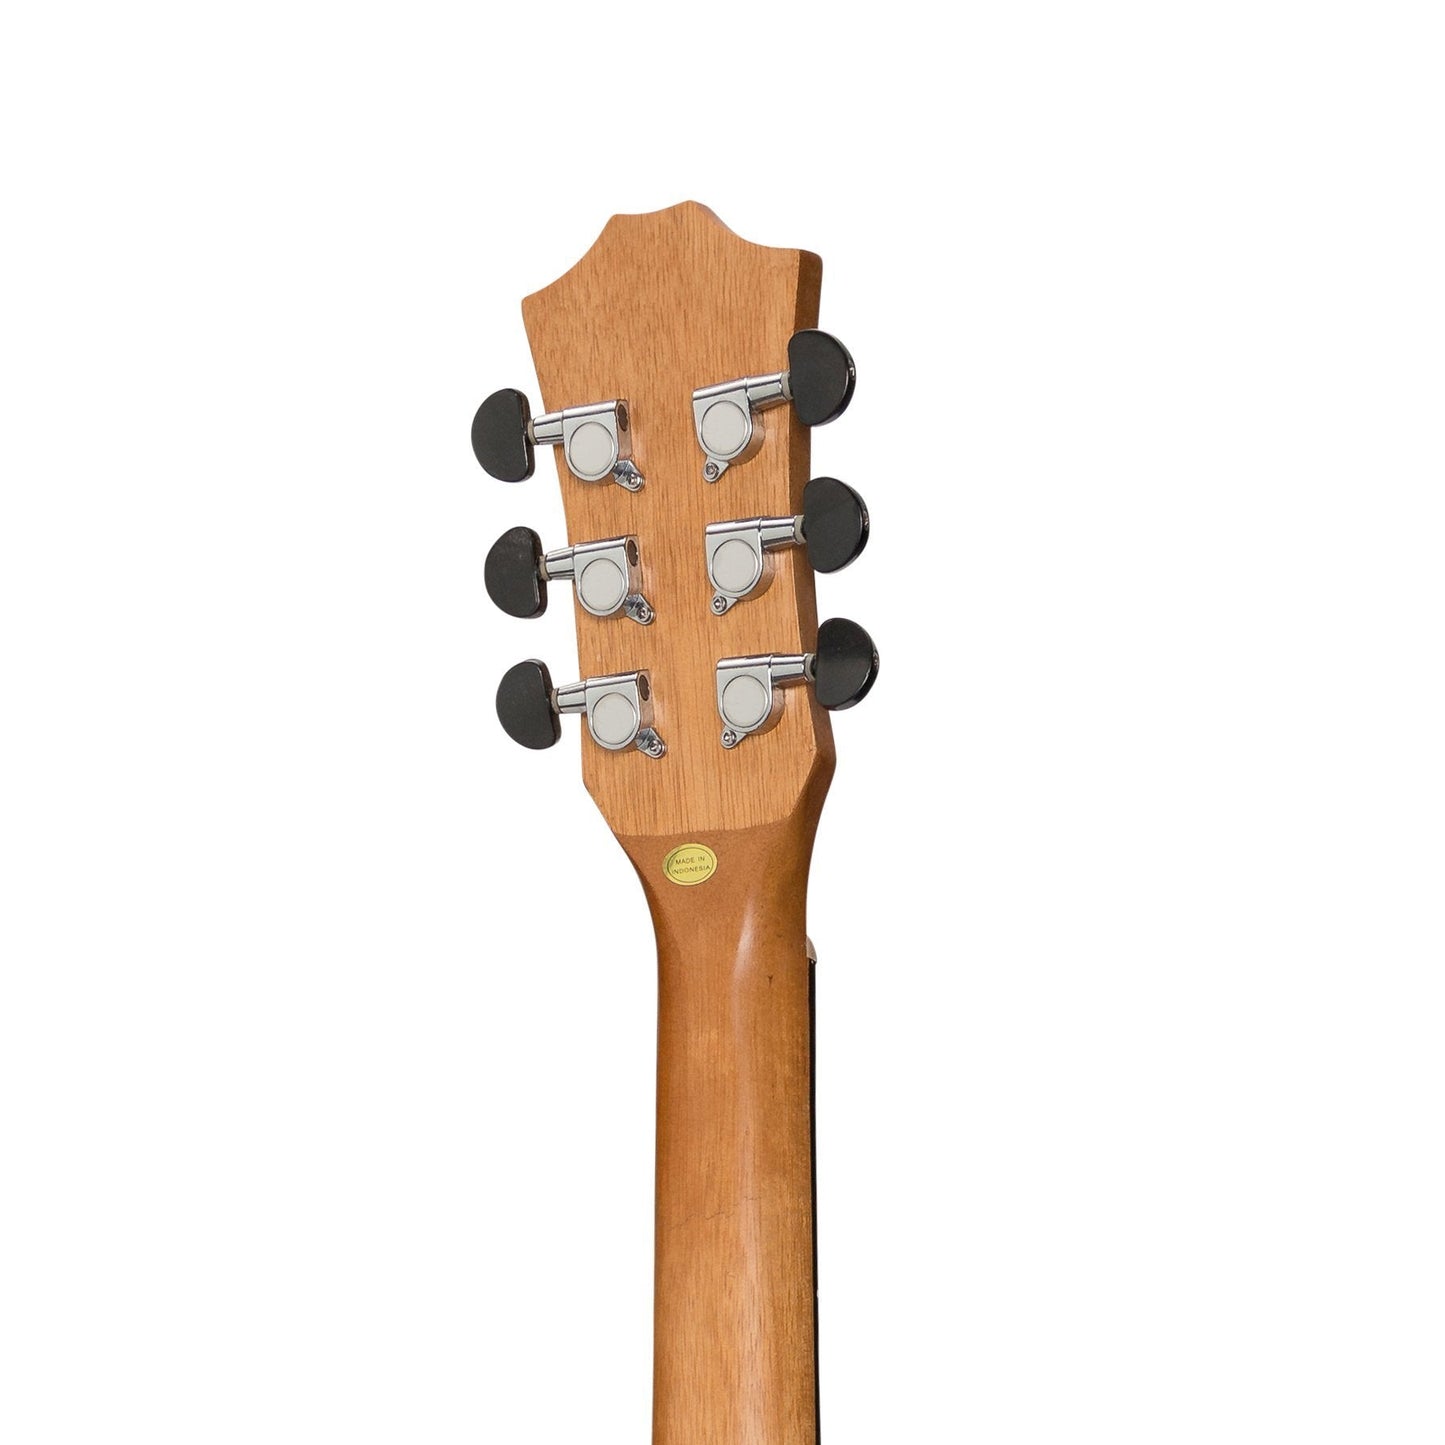 Sanchez Acoustic Small Body Guitar (Acacia)